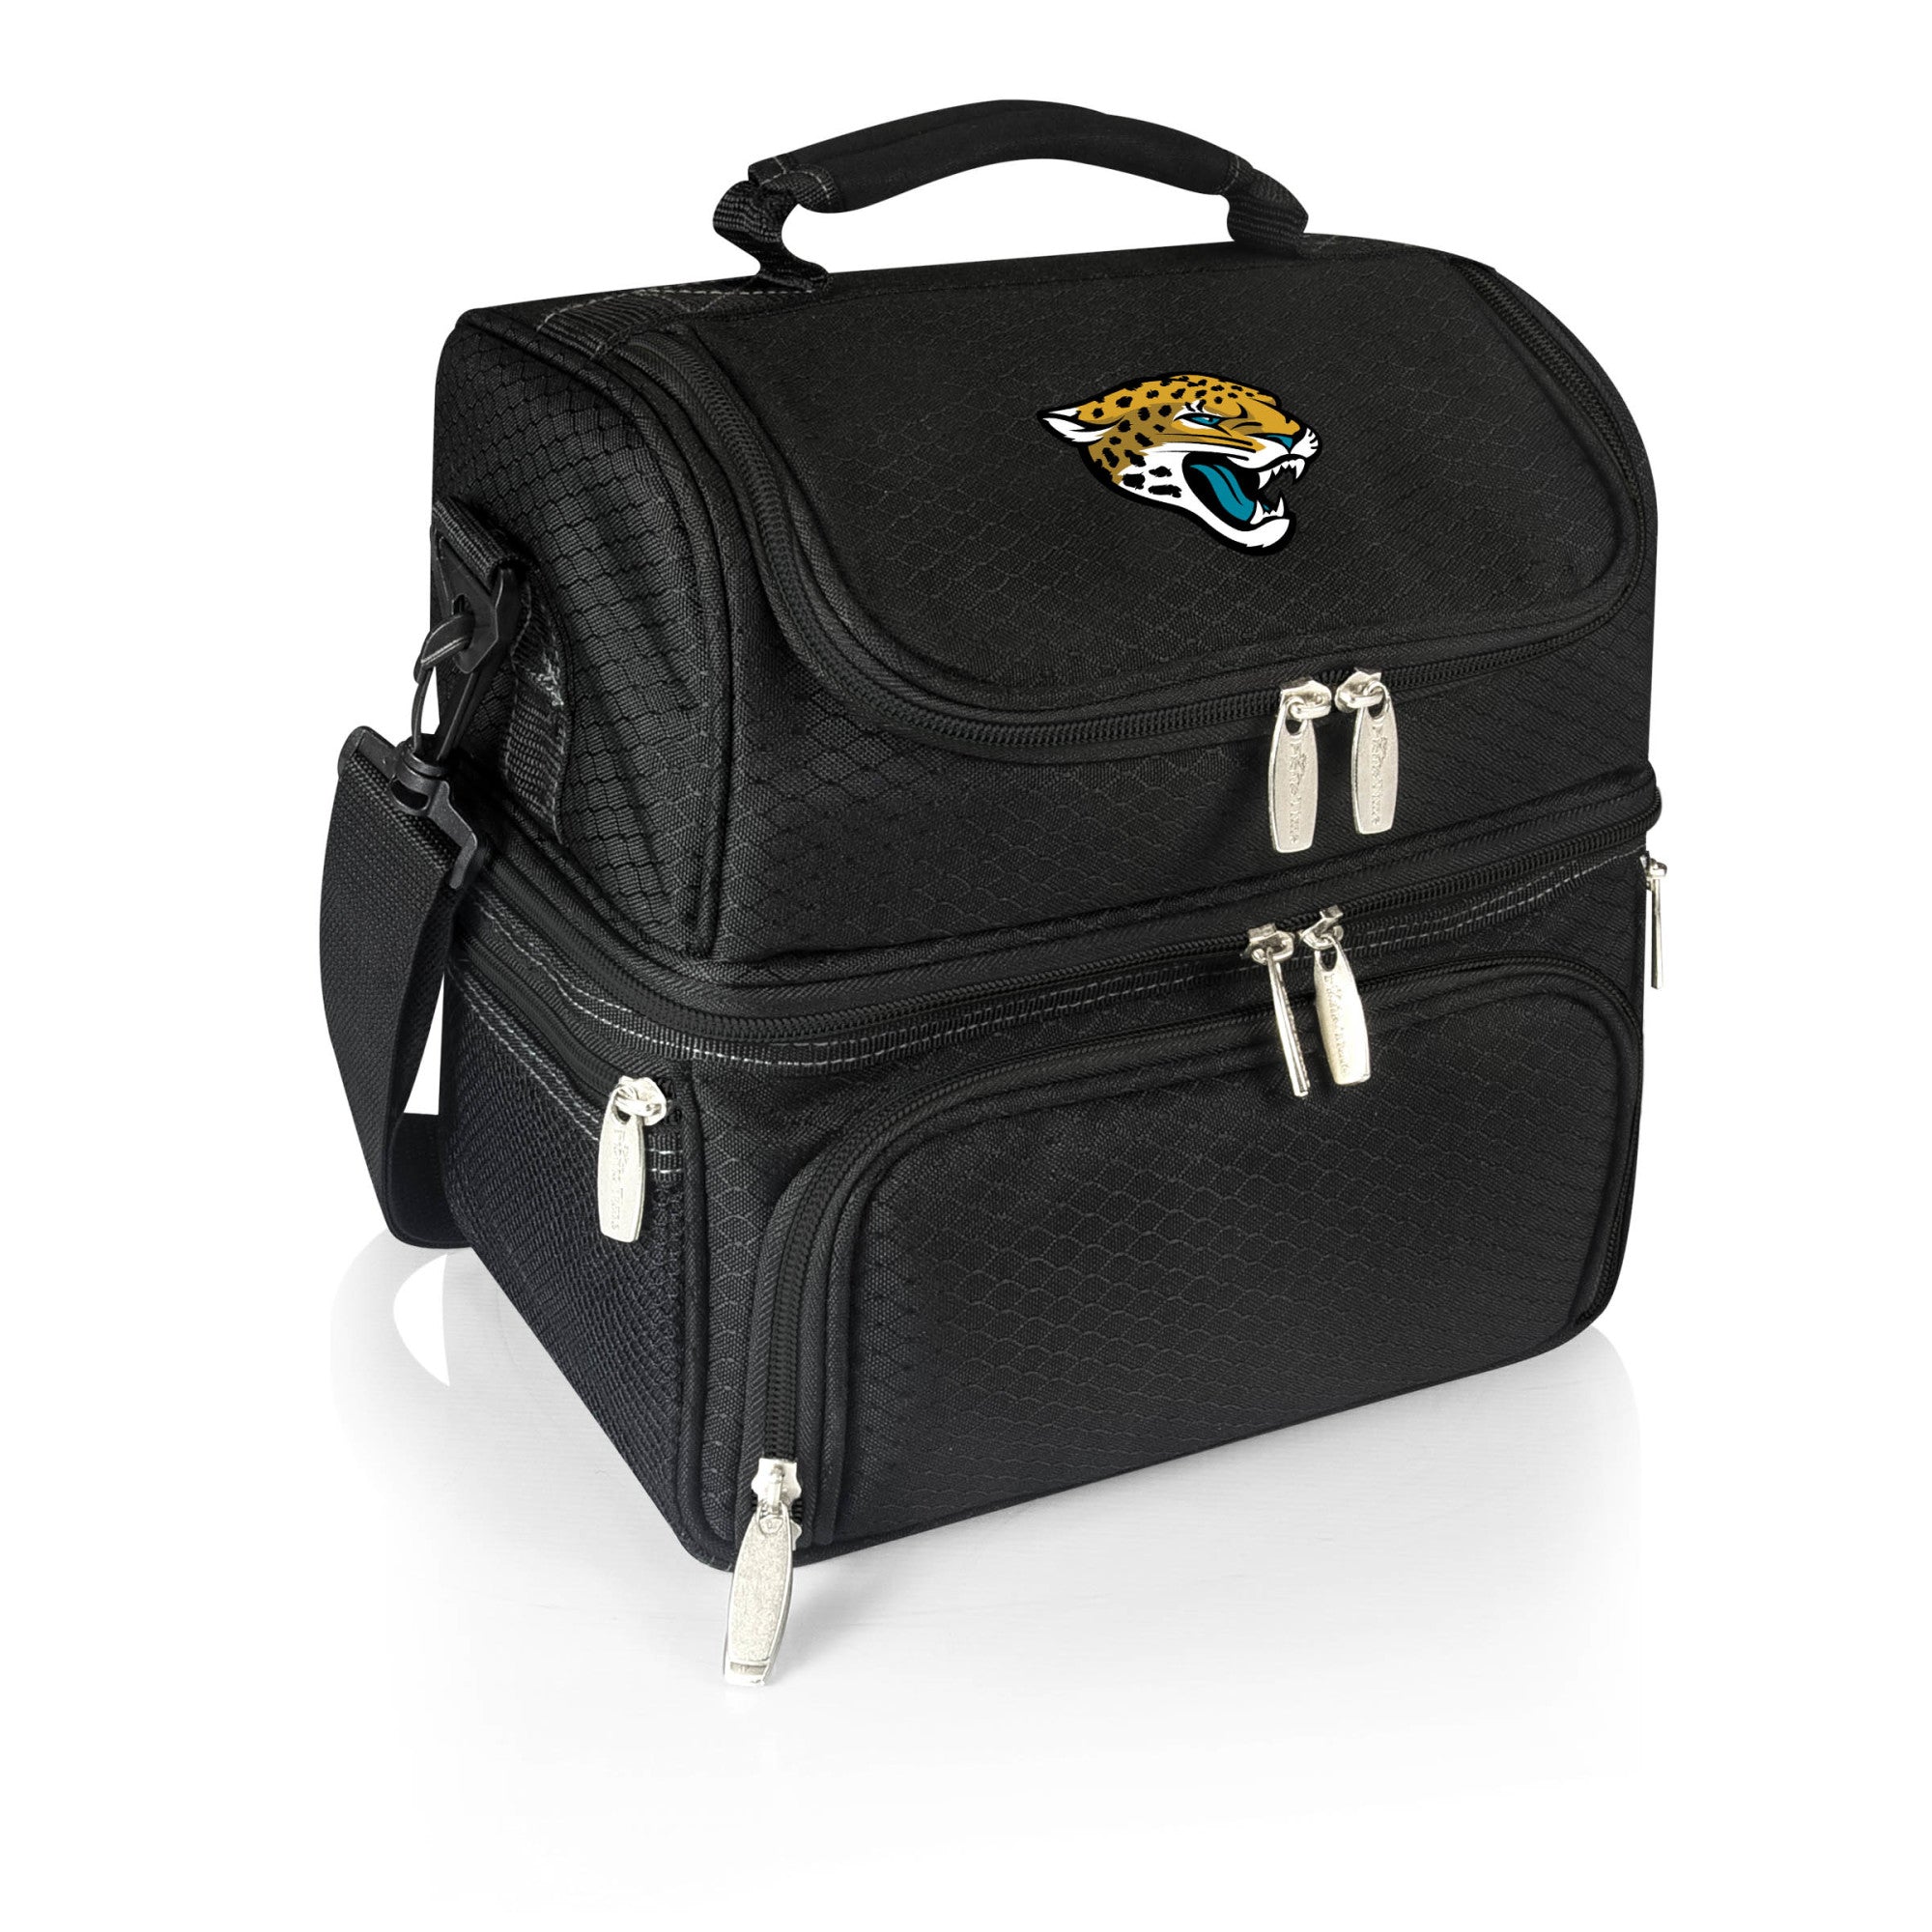 Jacksonville Jaguars - Pranzo Lunch Bag Cooler with Utensils